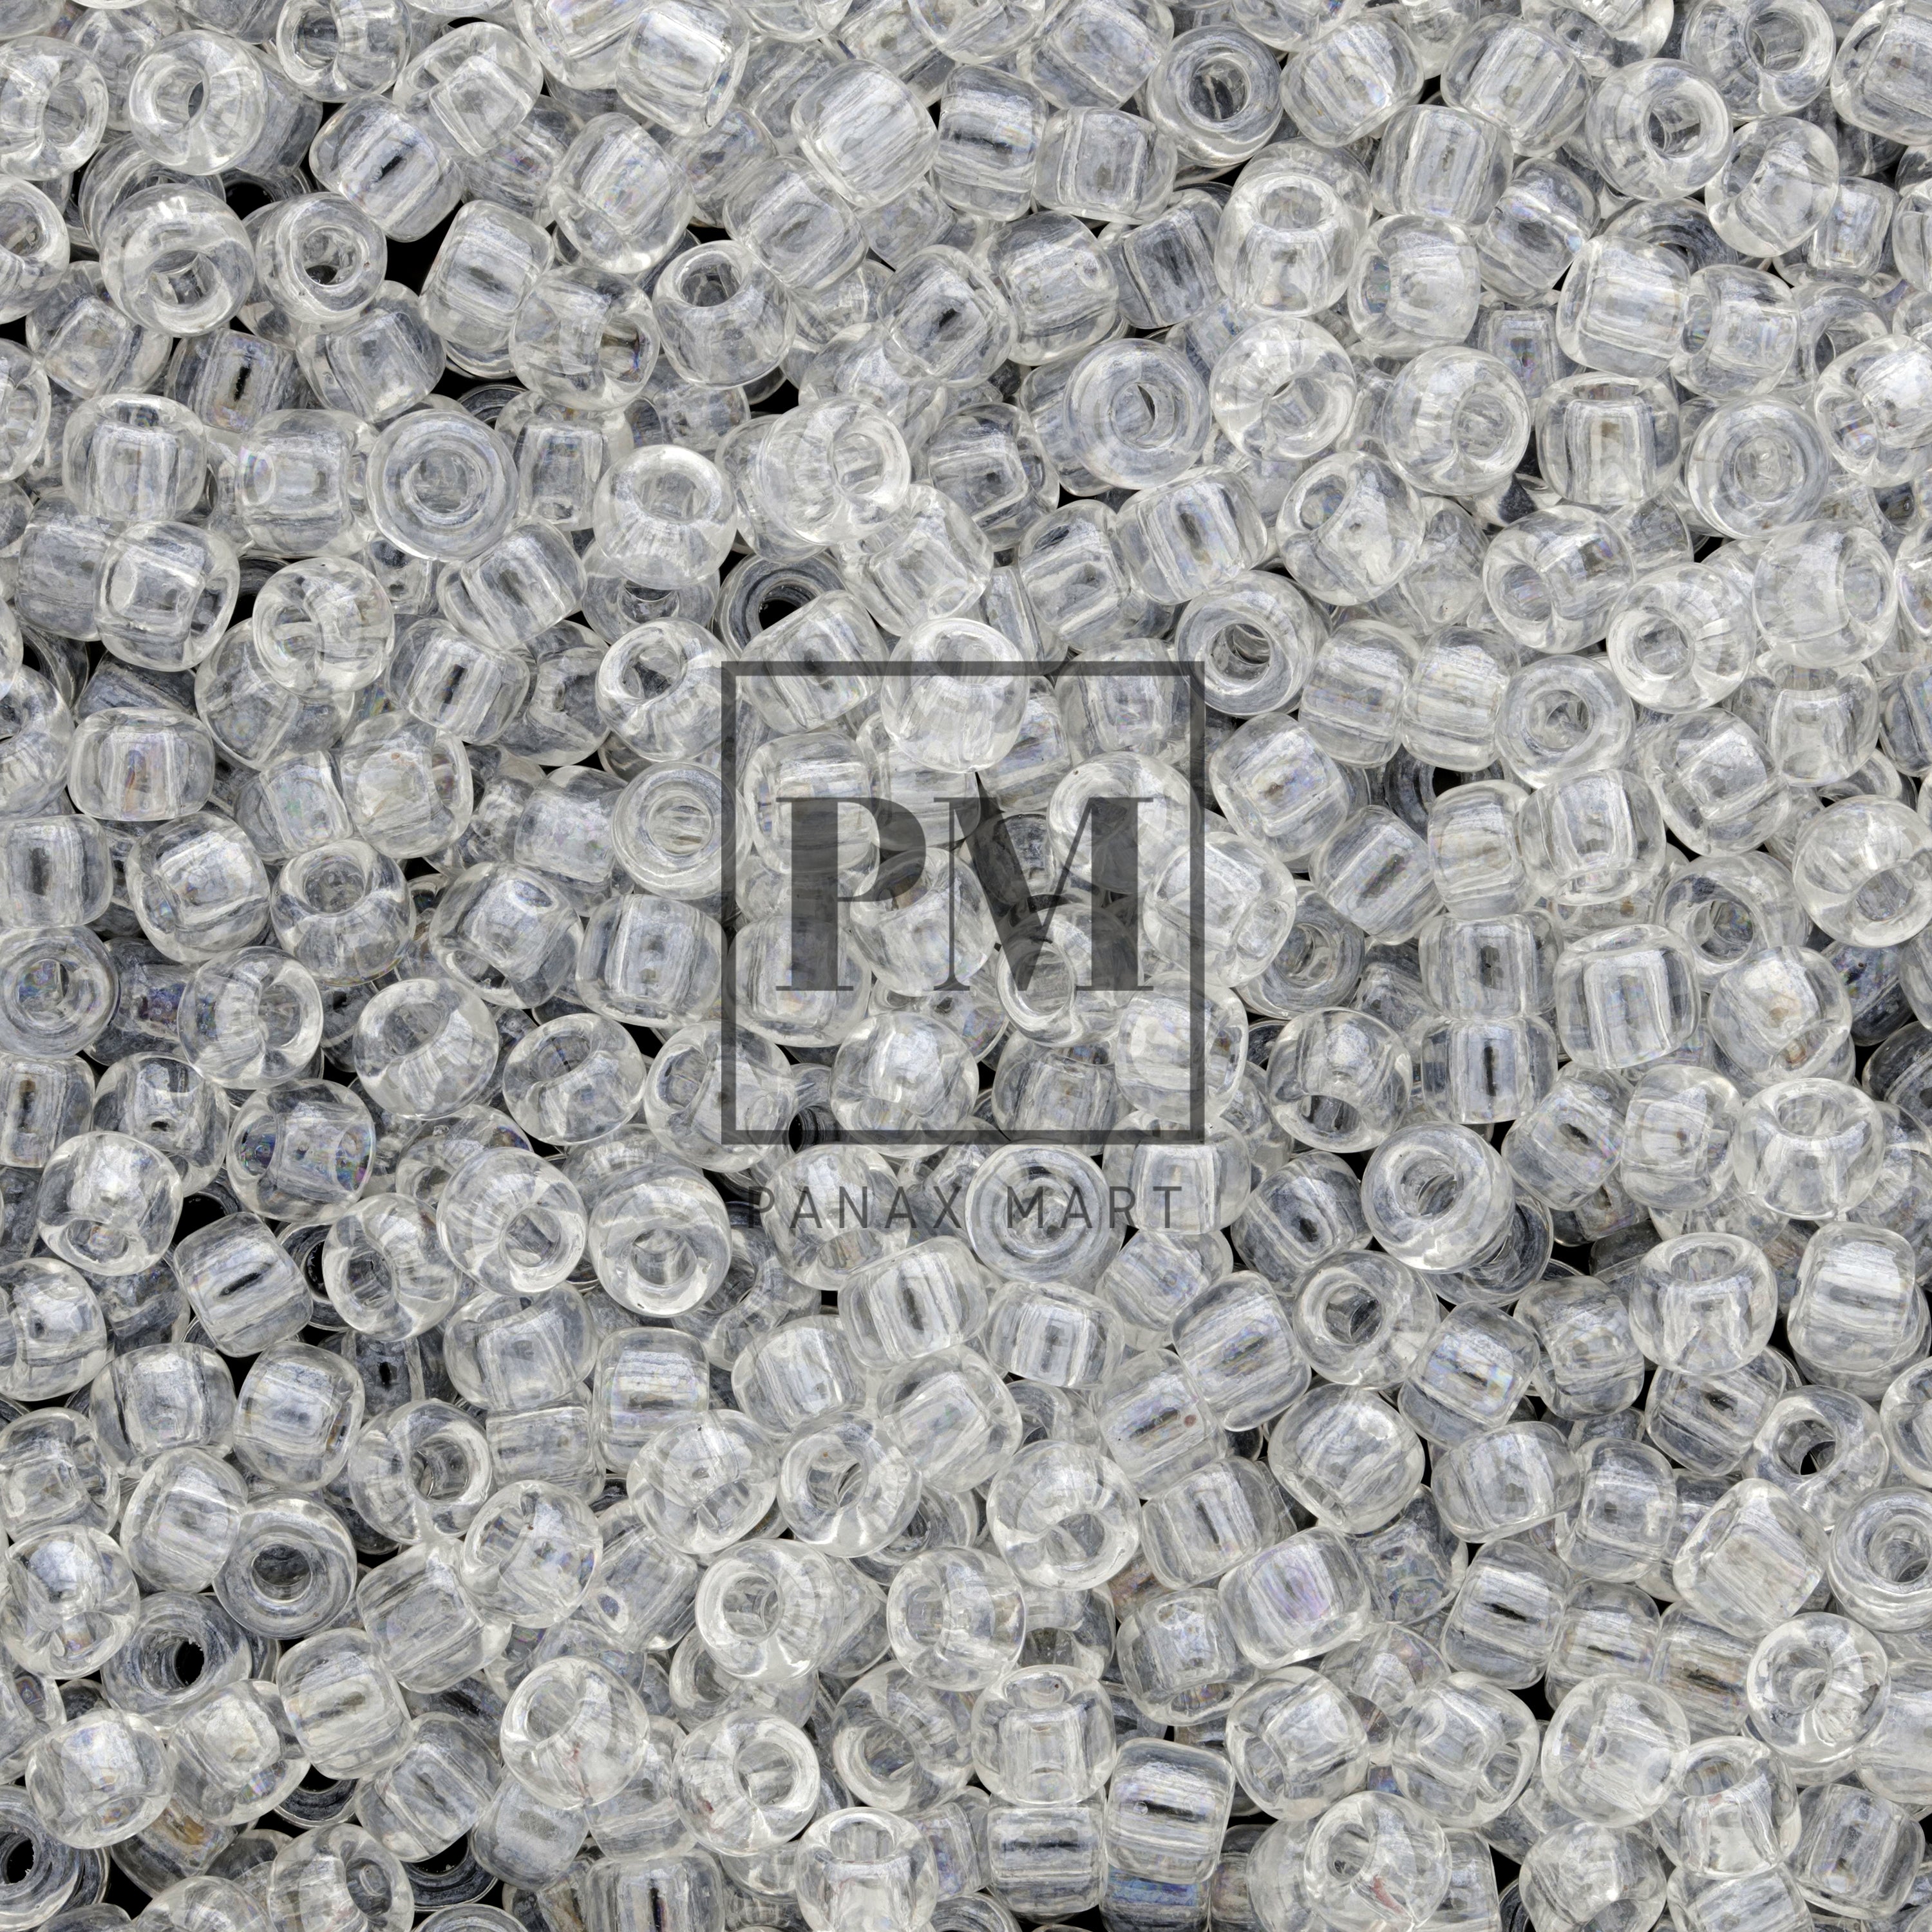 Matsuno Glass Beads (MGB) 11/0 RR 4L - Panax Mart